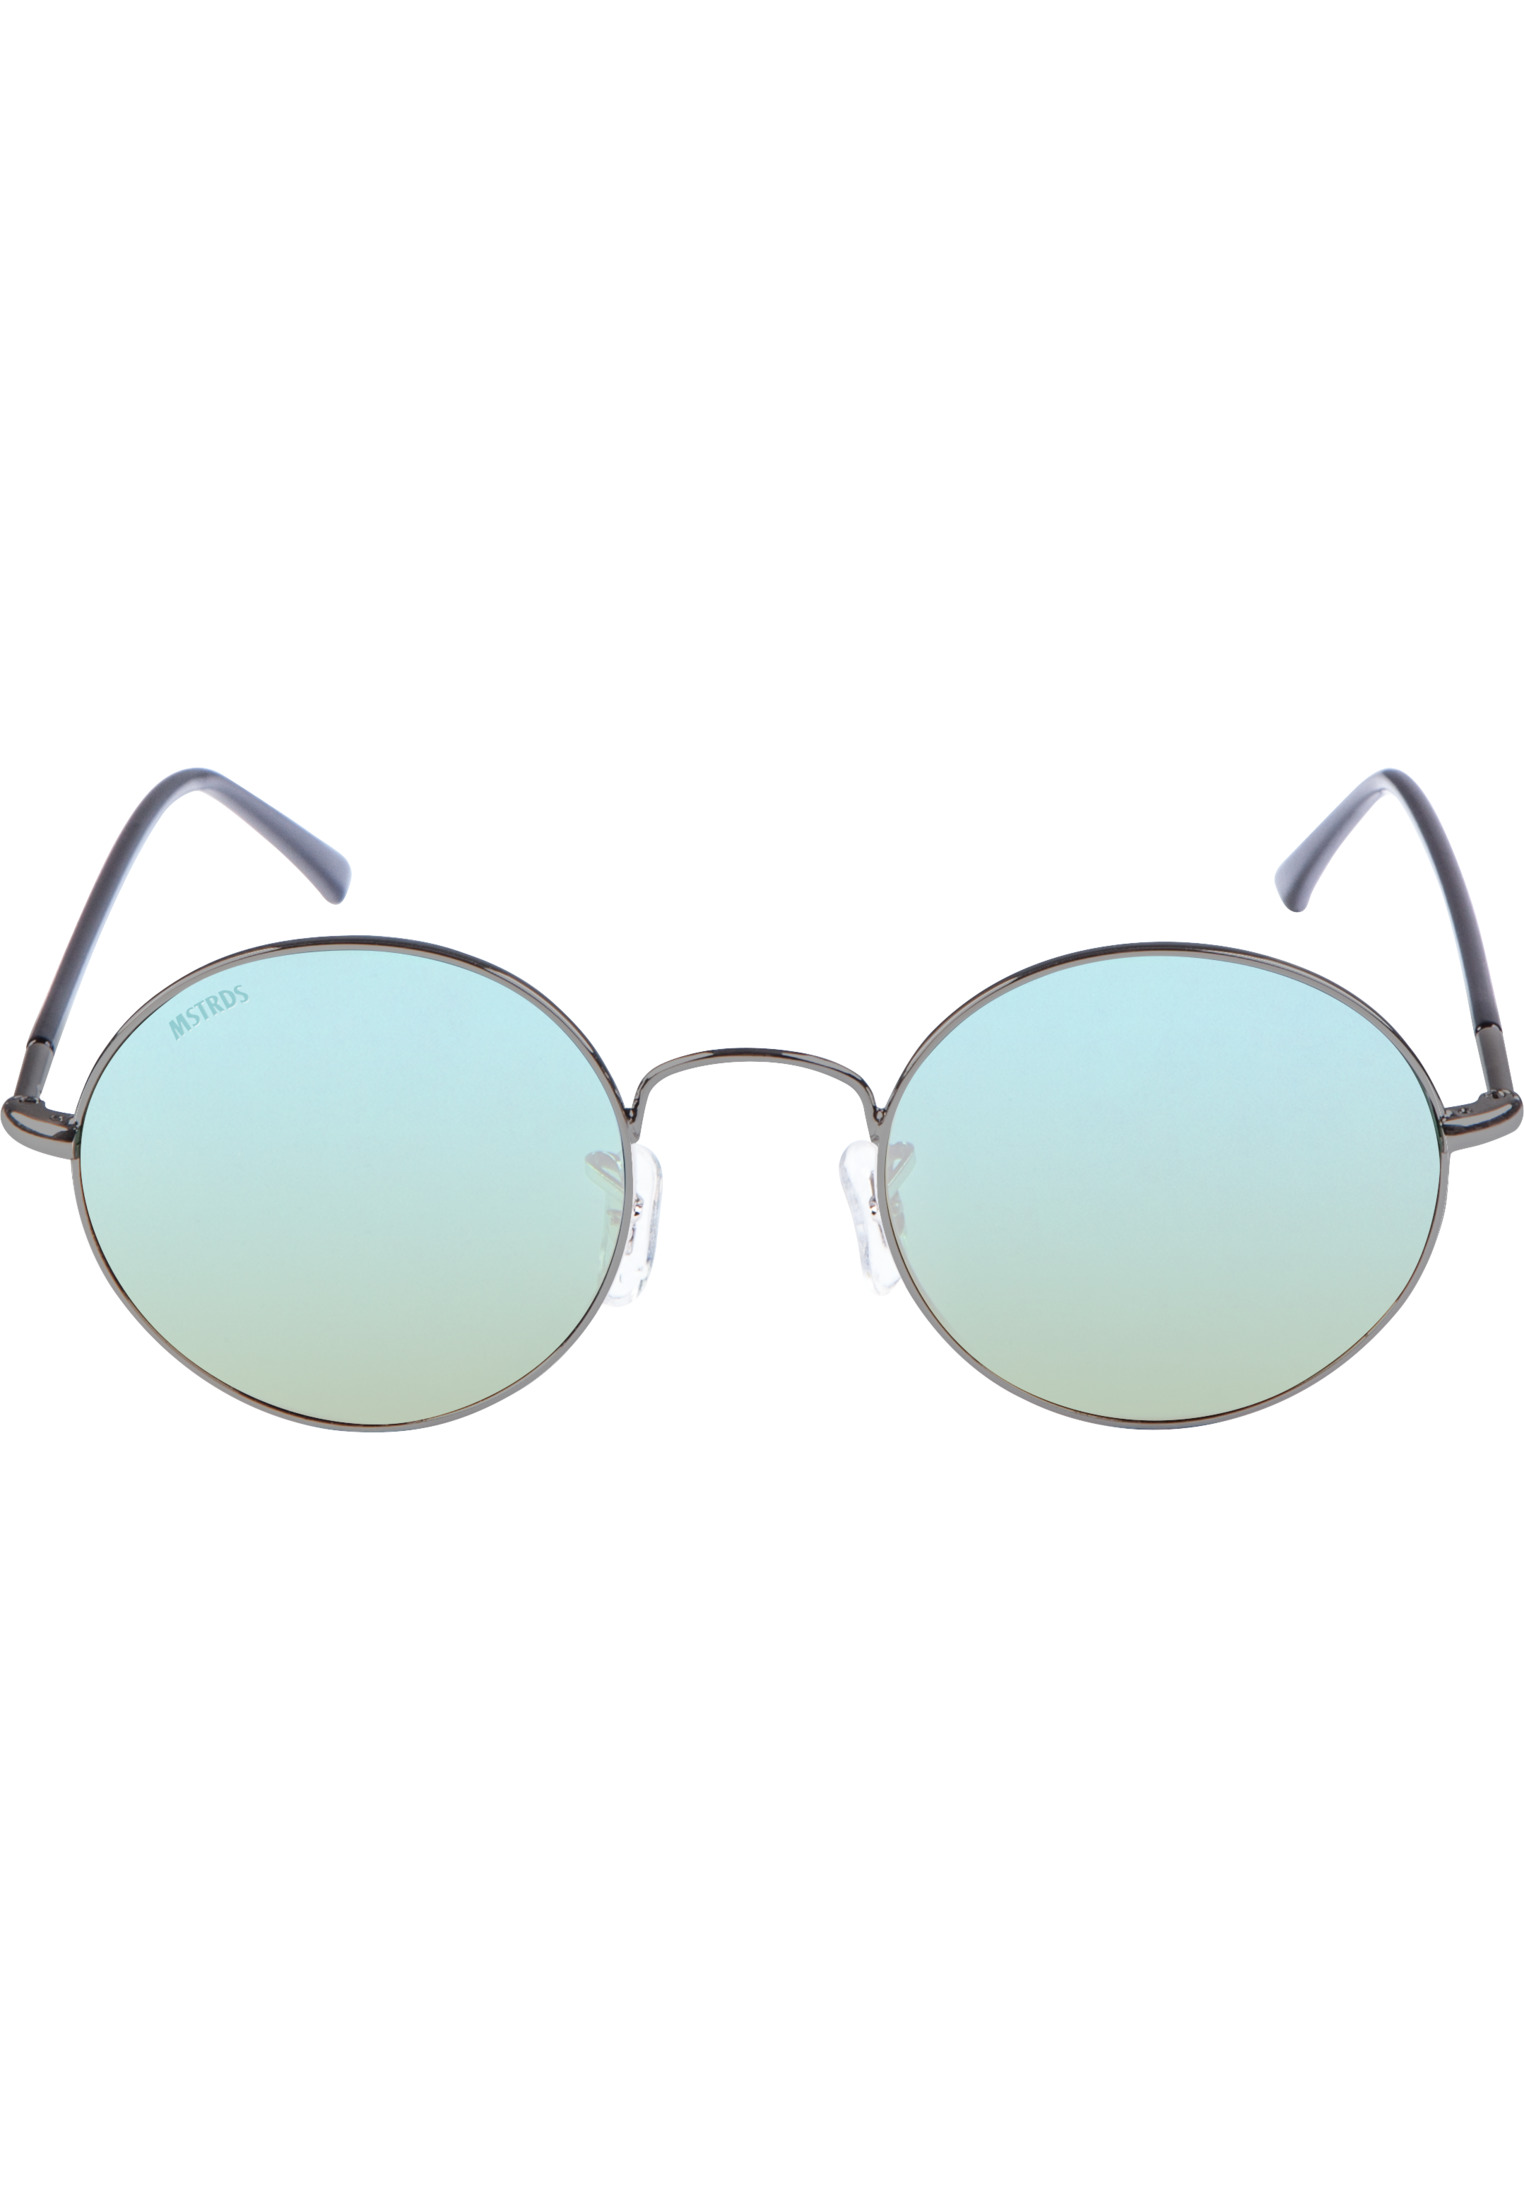 Accessoires Herren | Sonnenbrillen MSTRDS | Spy Sunglasses Unisex Ayazo Sonnenbrille |